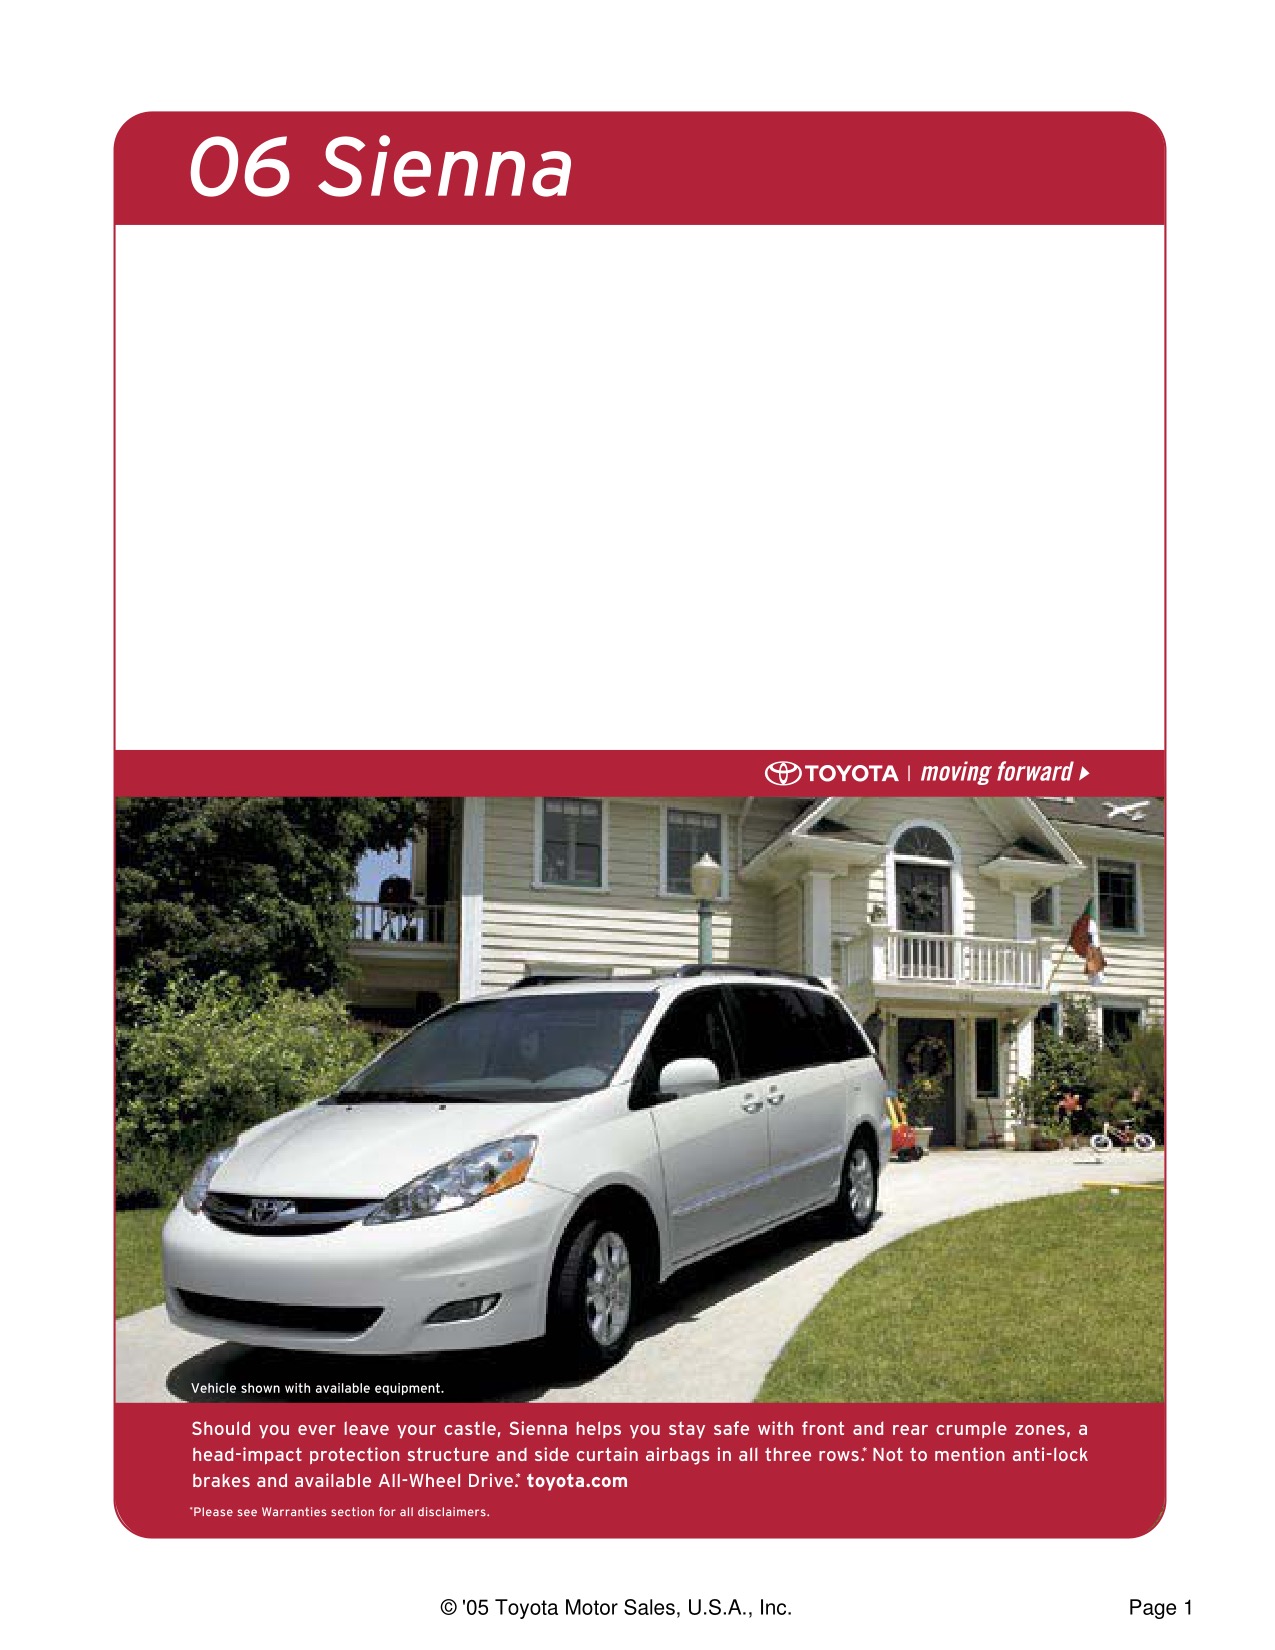 2006 Toyota Sienna Brochure